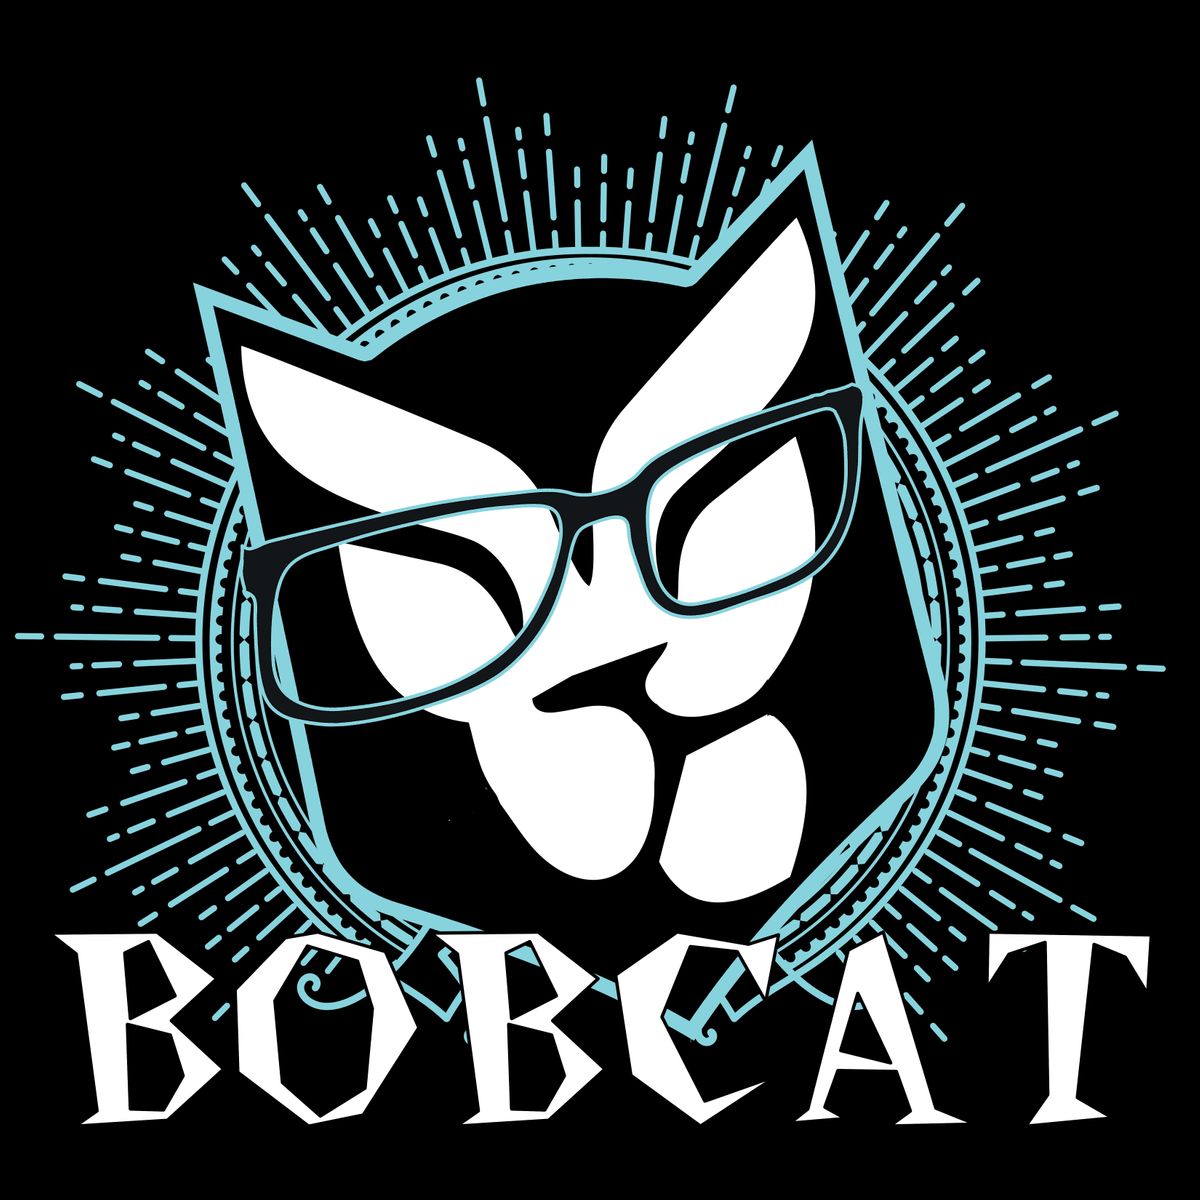 Bobcat Live At The Attic Music Bar Saint Louis MO